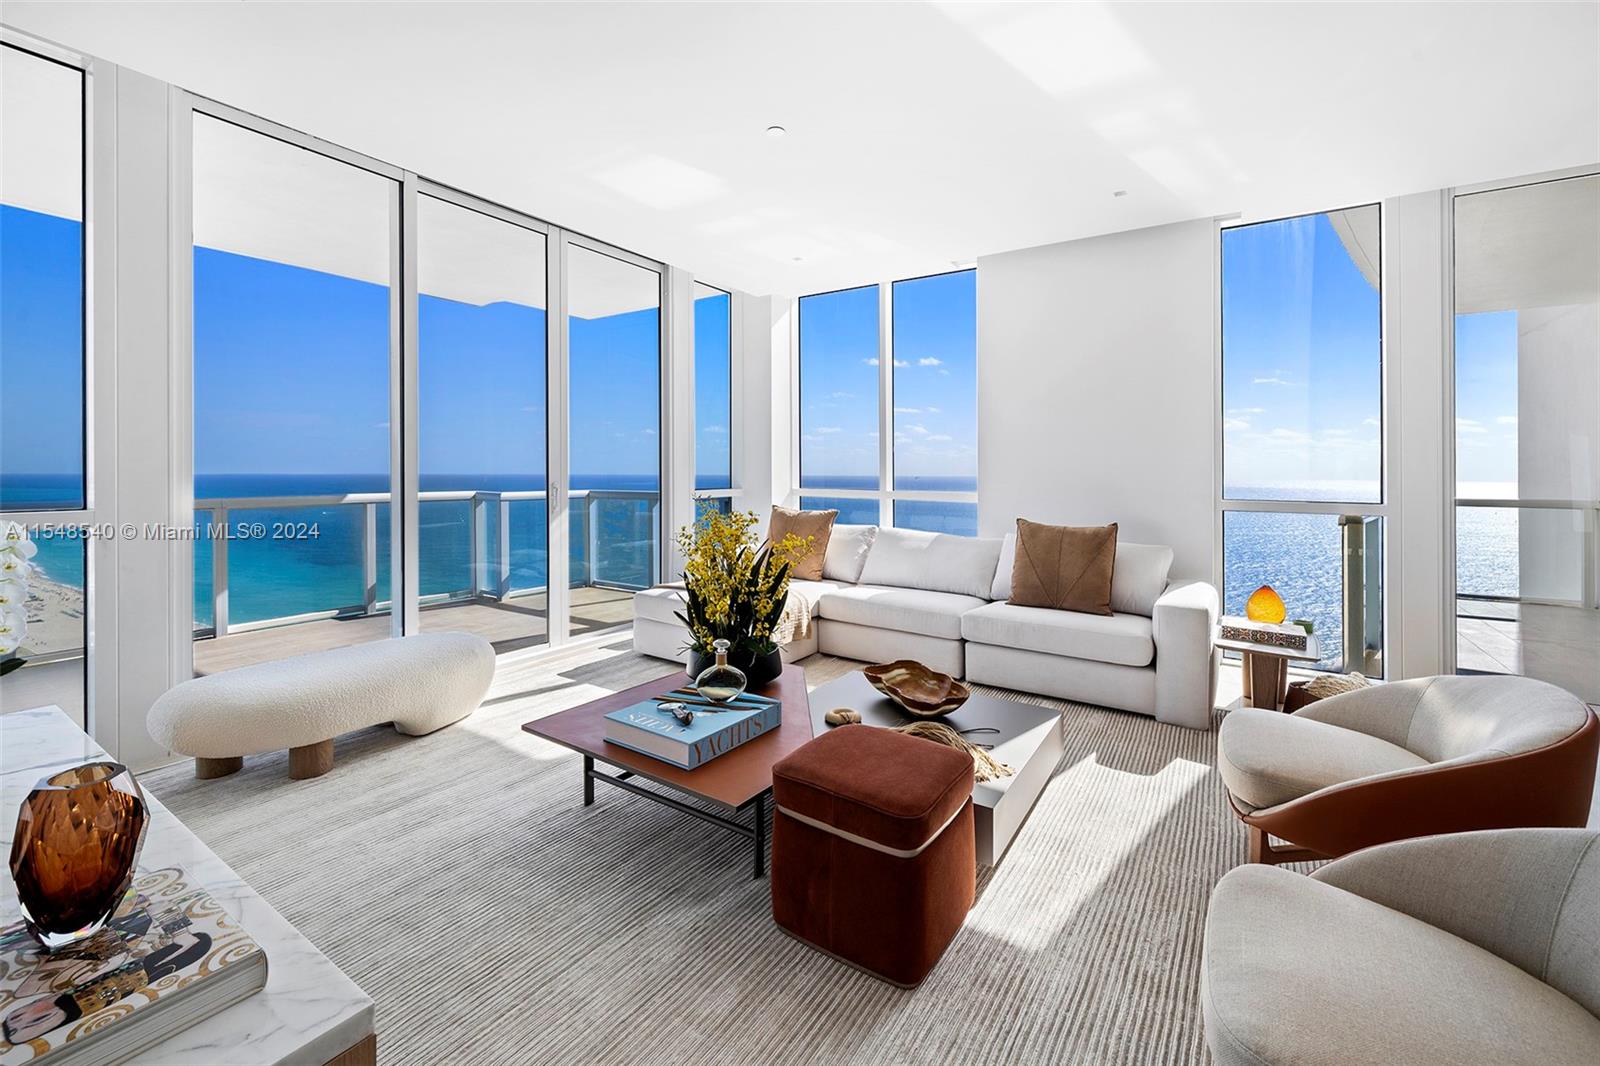 Property for Sale at 50 S Pointe Dr 3401, Miami Beach, Miami-Dade County, Florida - Bedrooms: 4 
Bathrooms: 5  - $15,900,000